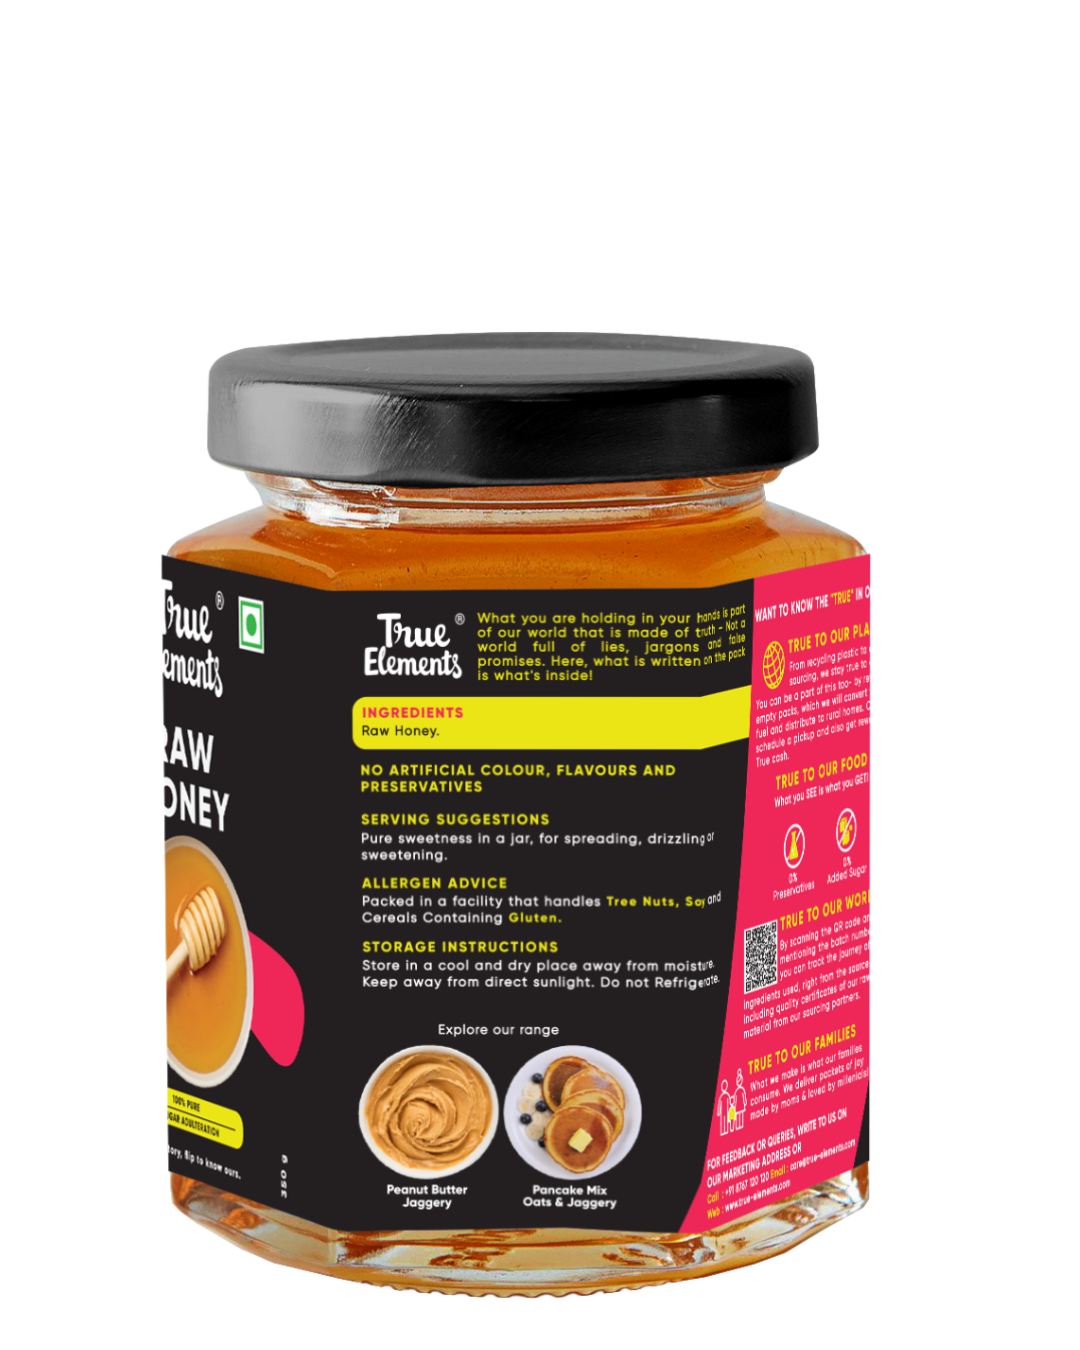 True Elements Raw Honey 350gm (pack of 2) ingredients